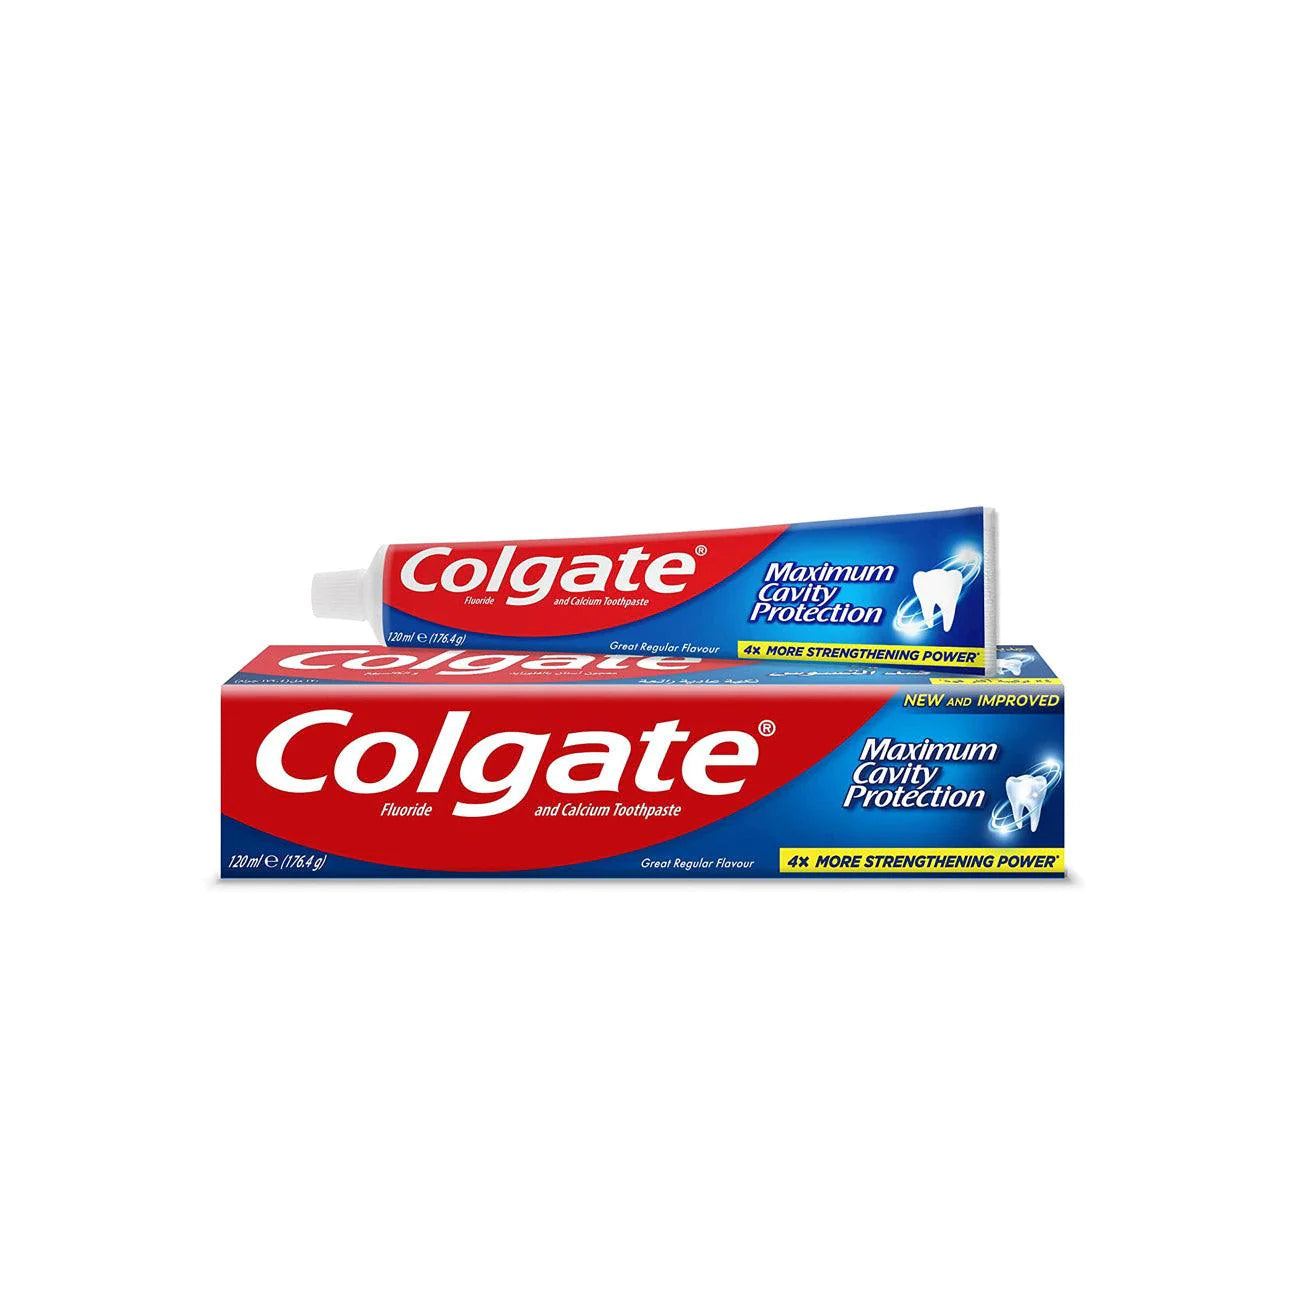 Colgate toothpaste against cavities - MazenOnline